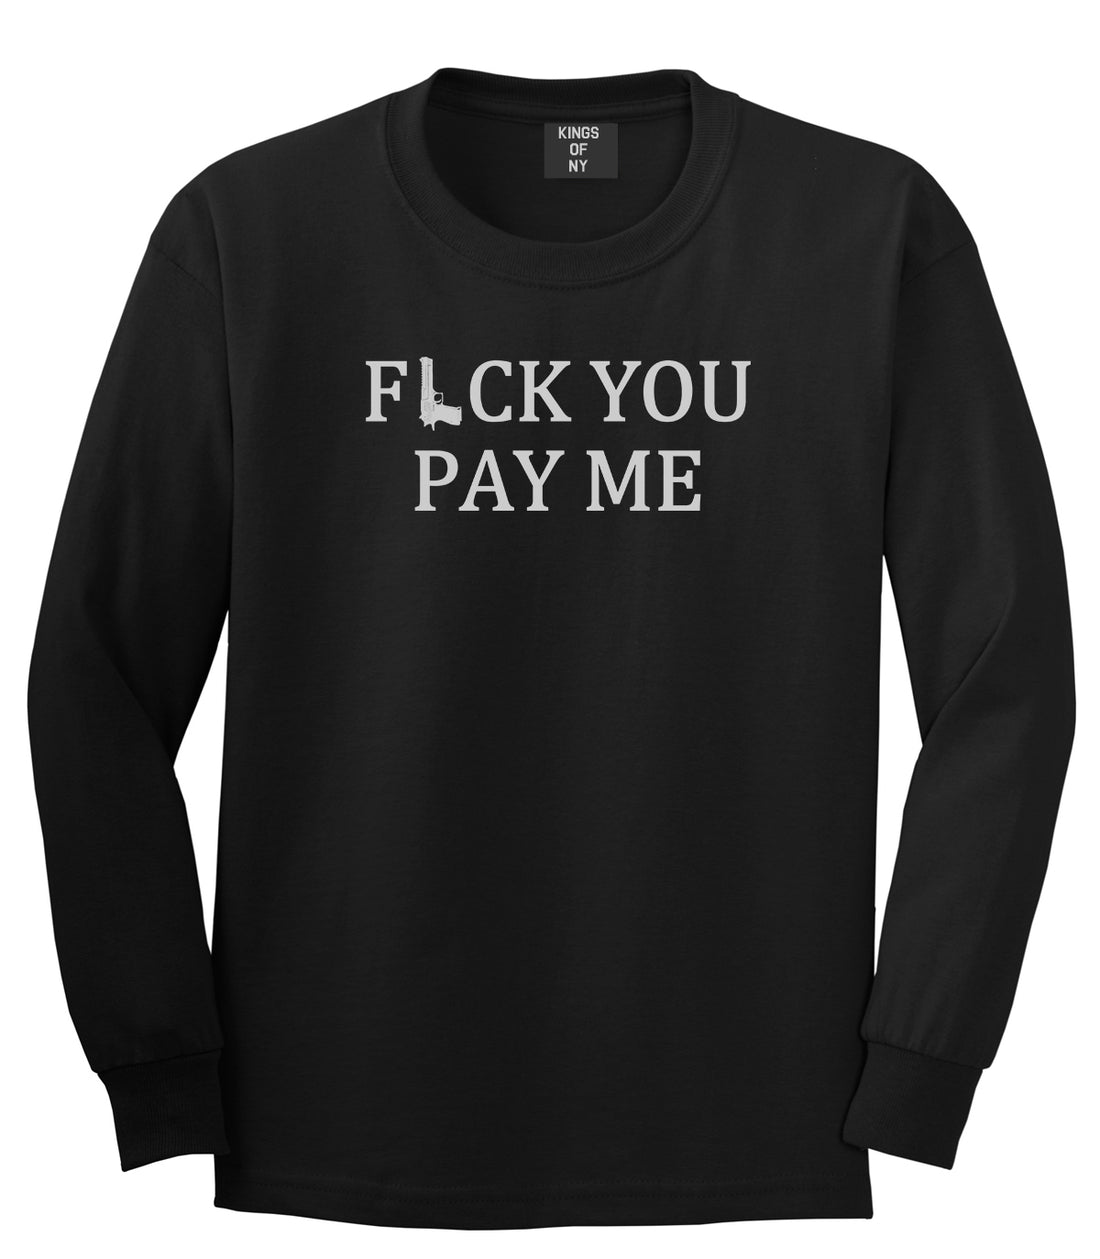 Fck You Pay Me Gun Mens Long Sleeve T-Shirt Black by Kings Of NY